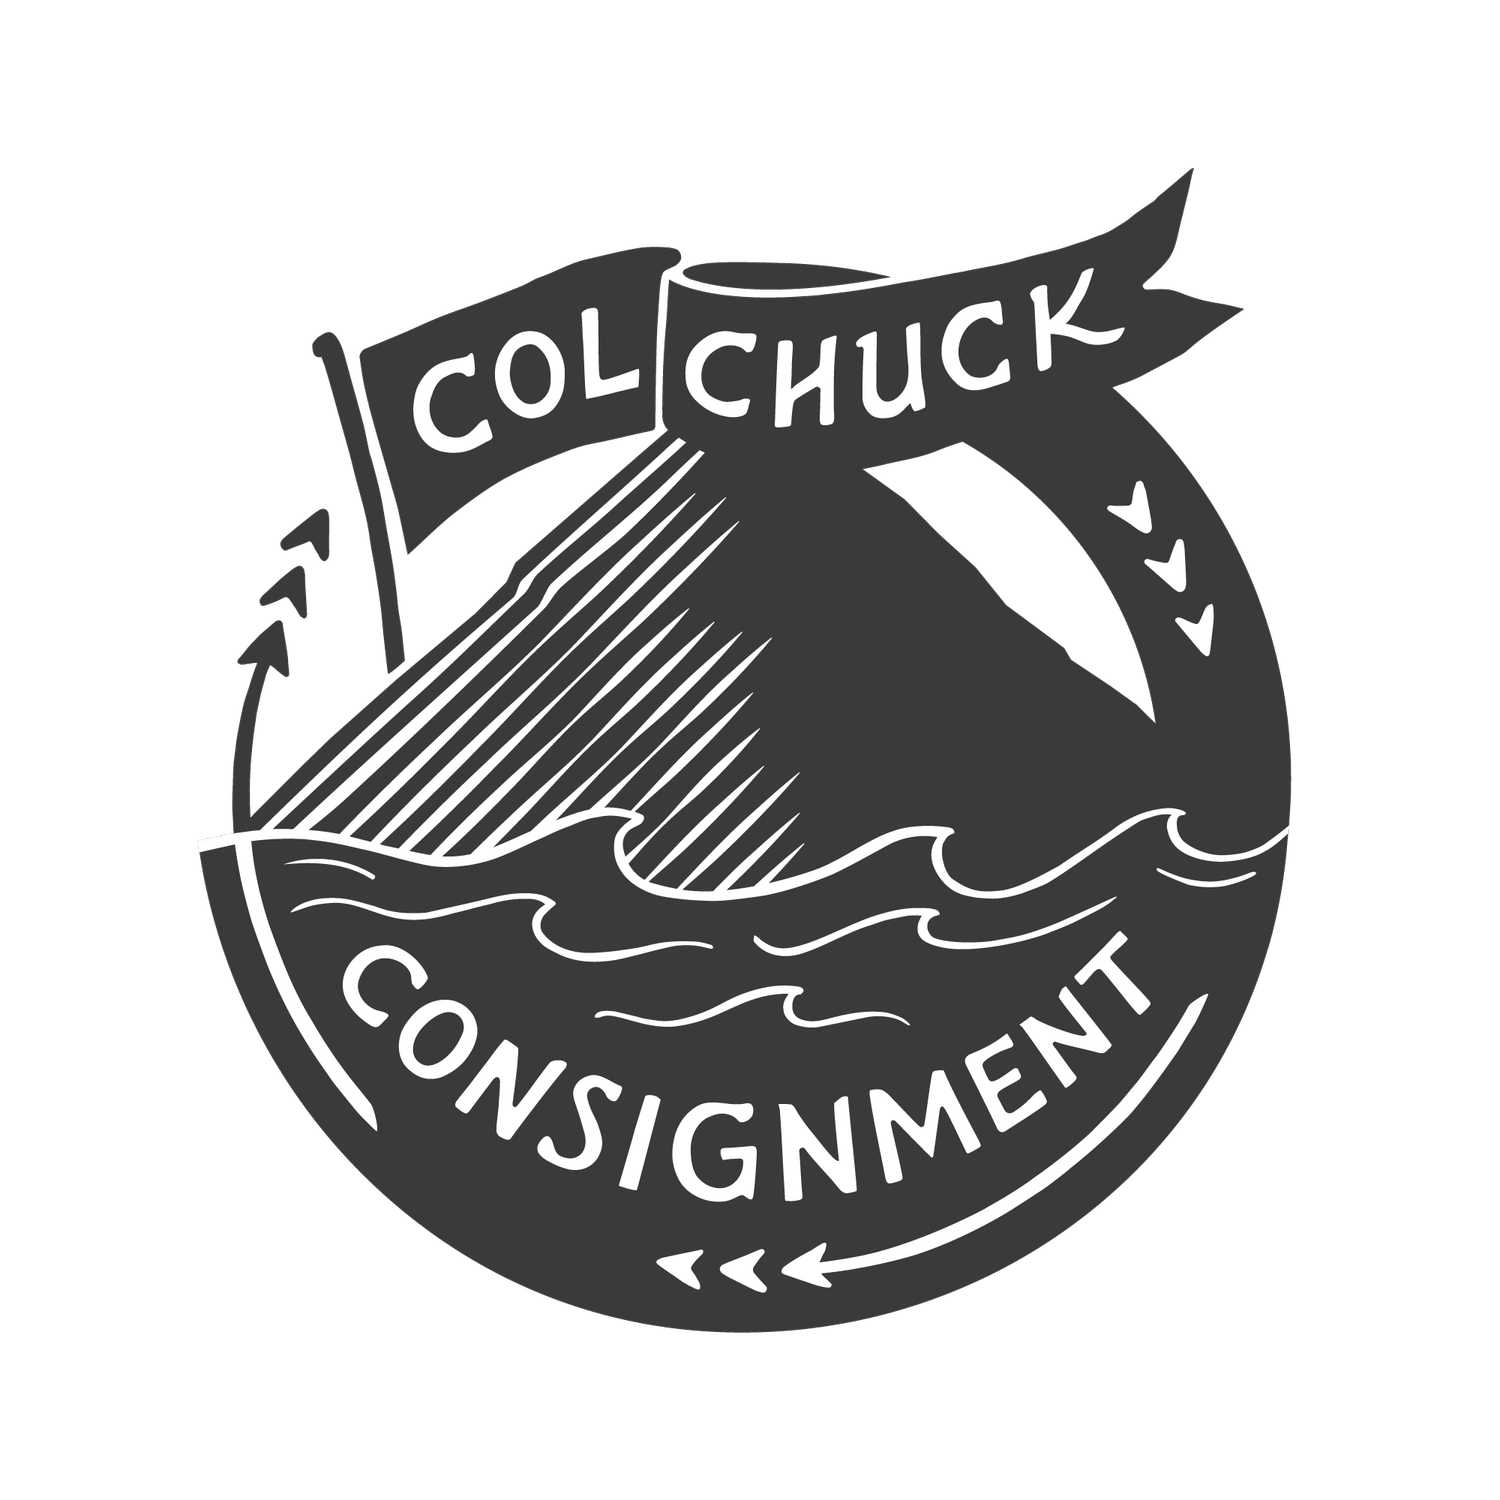 Colchuck Consignment